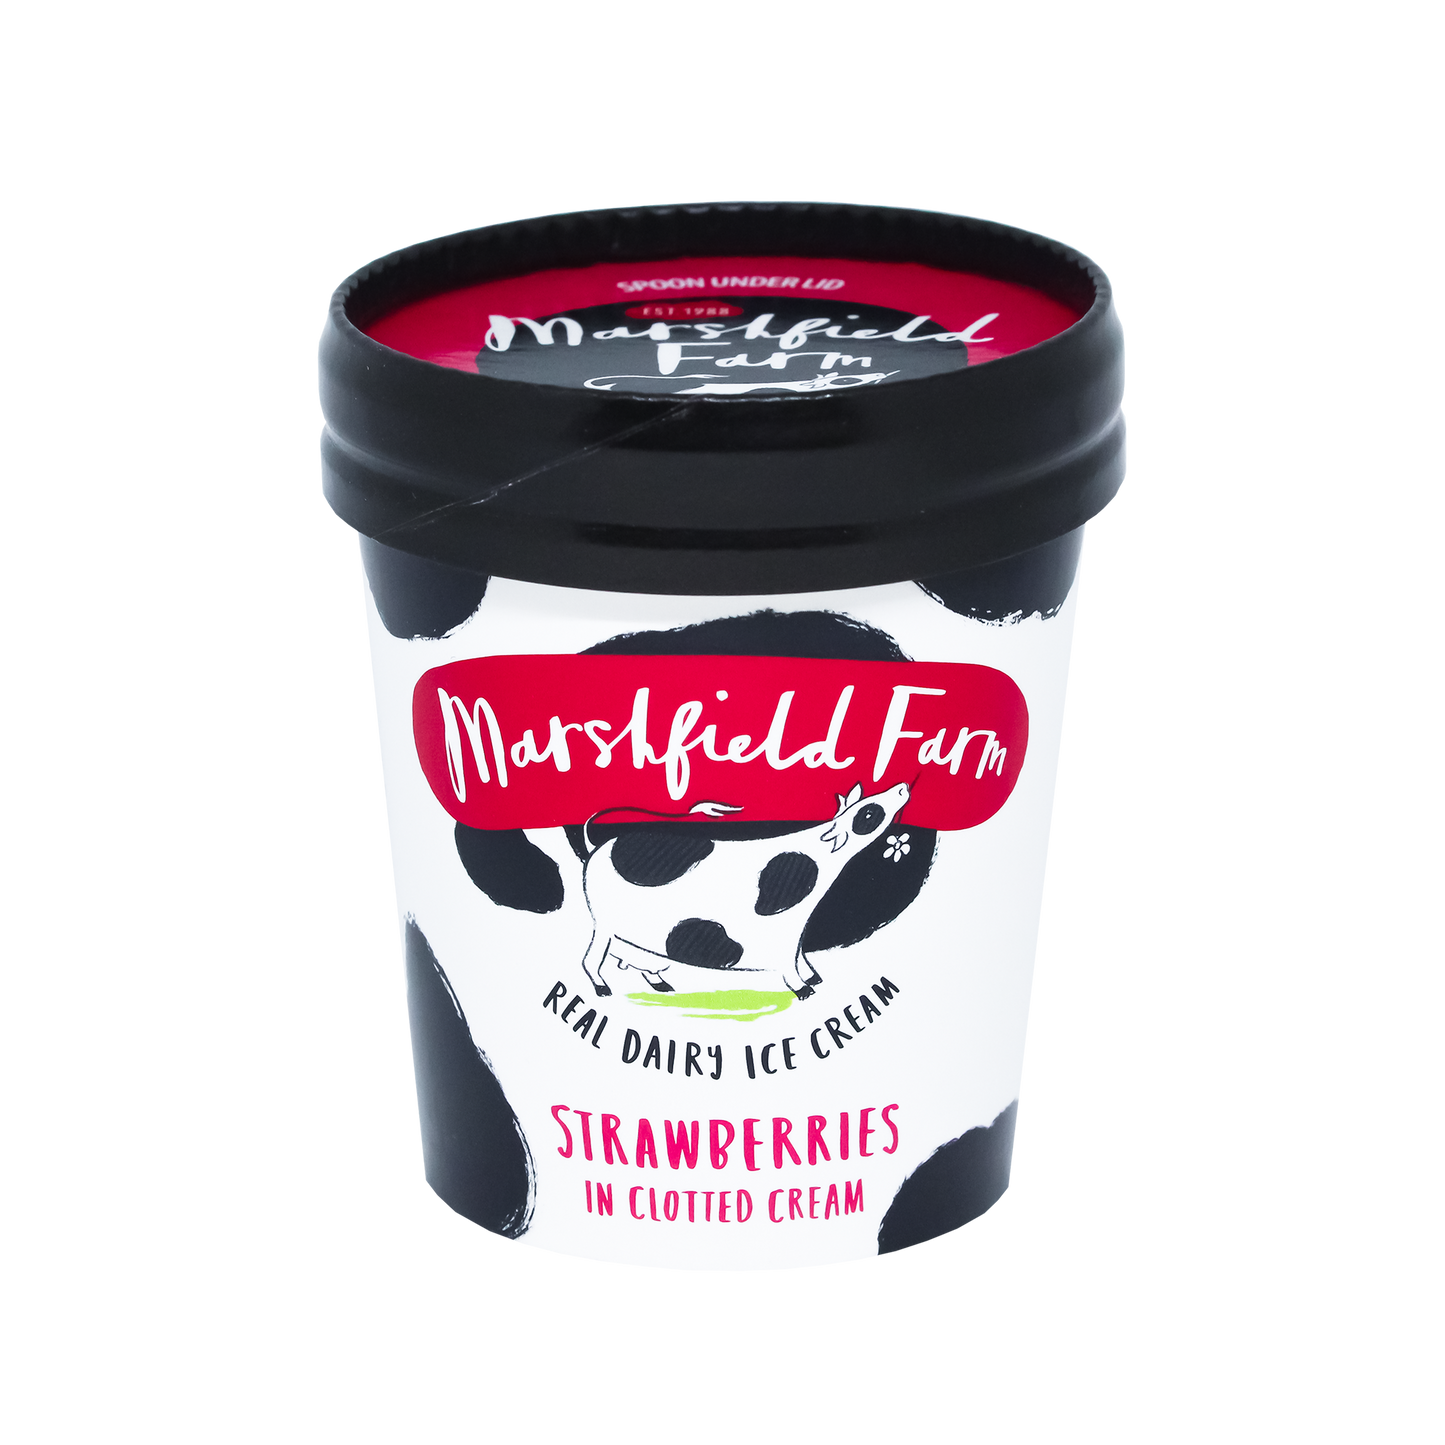 Marshfield Farm Strawberries in Clotted Cream Ice Cream 125ml Tub